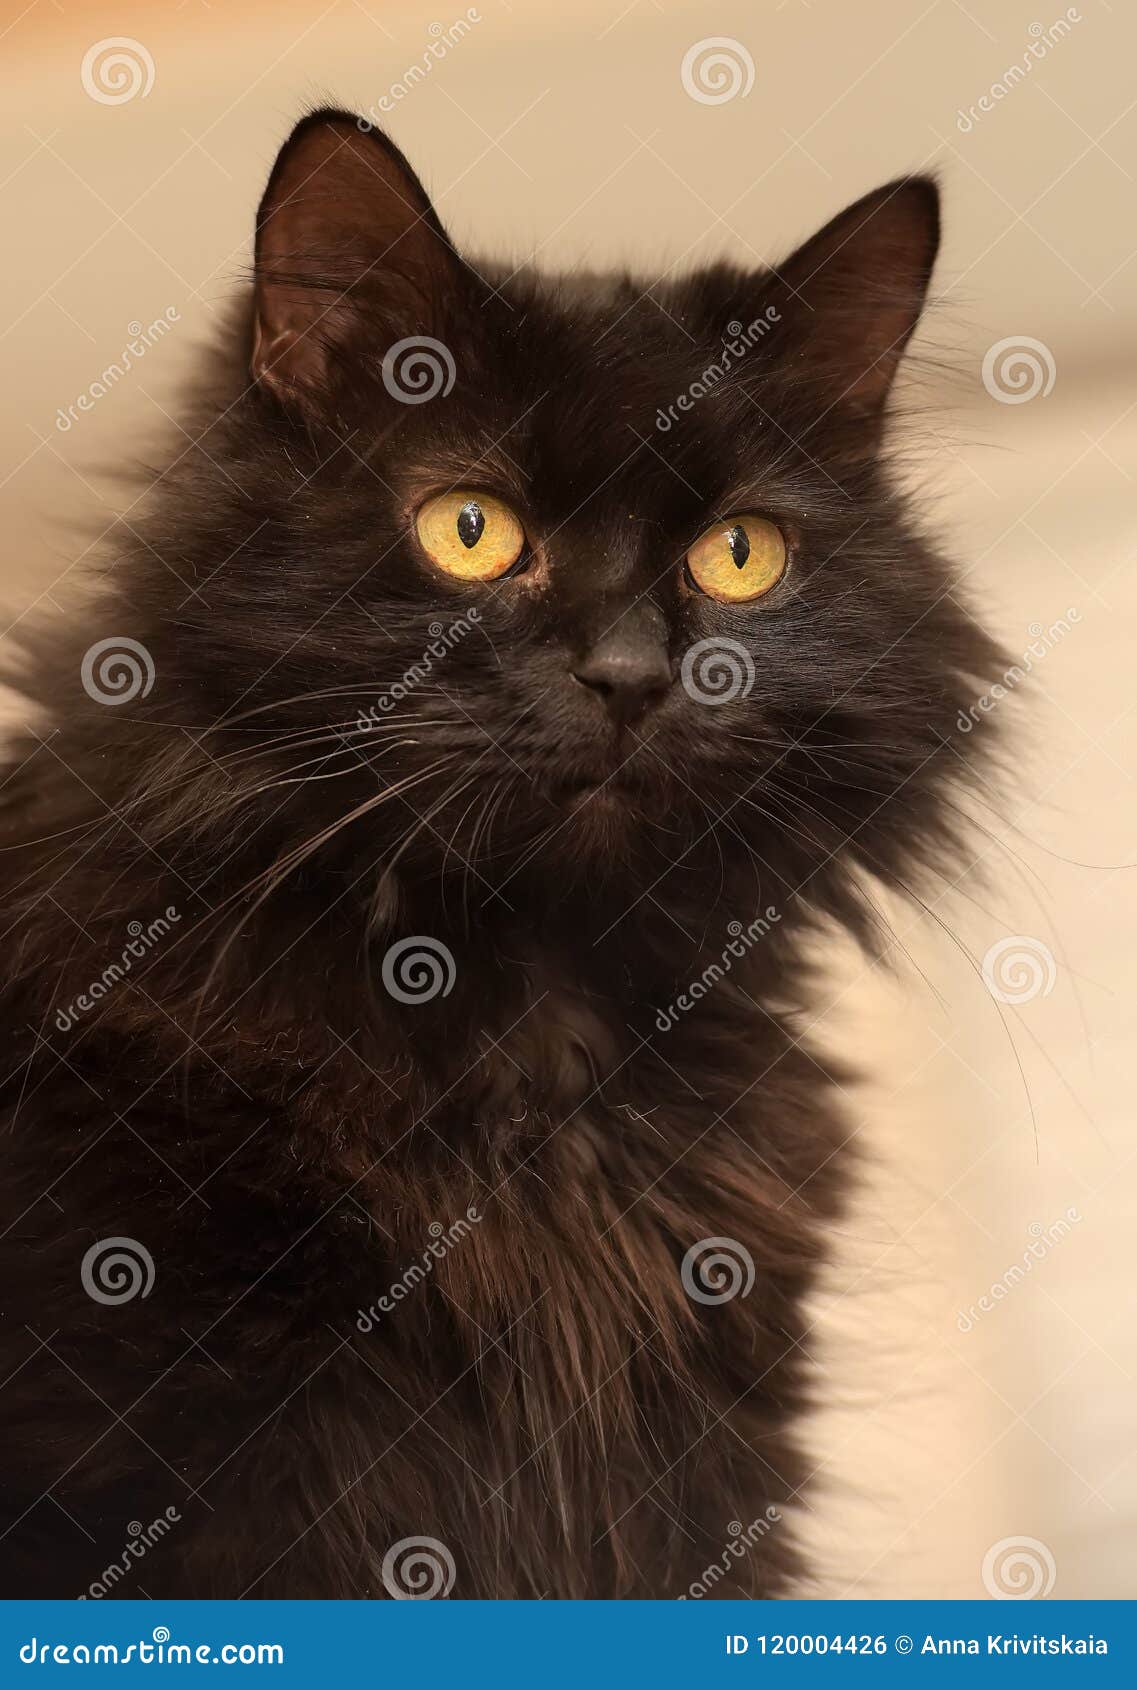 Cat Of The Breed Chantilly Tiffany Stock Photo Image Of Cute Dark 120004426